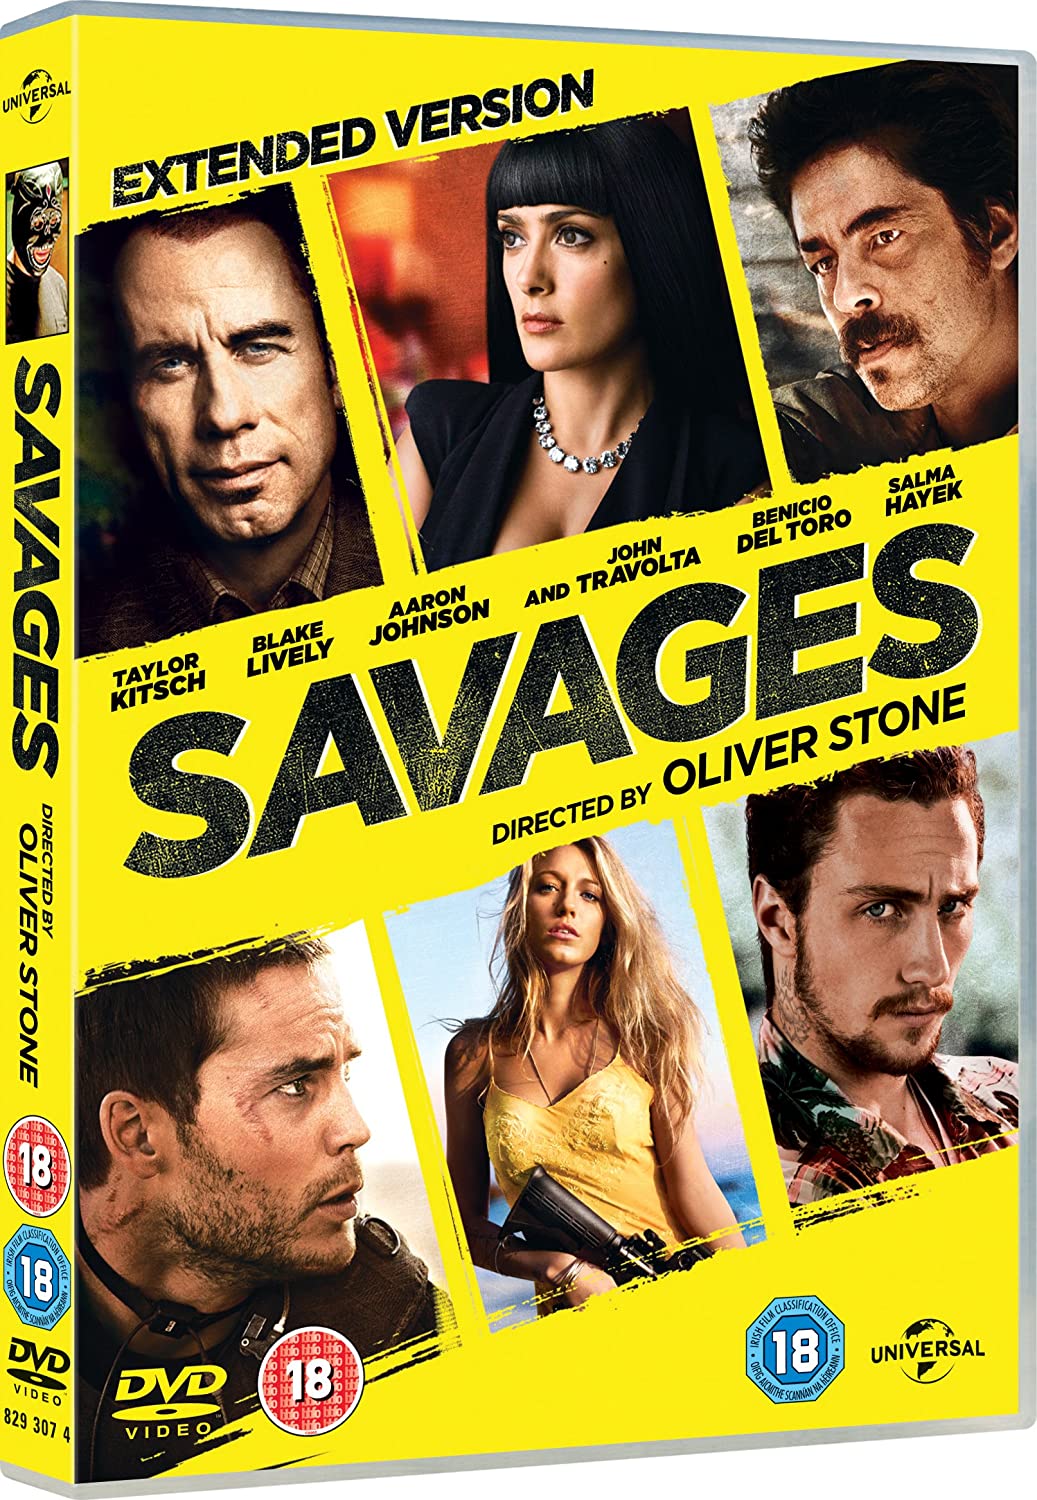 SAVAGES (2012) - Crime/Thriller [DVD]